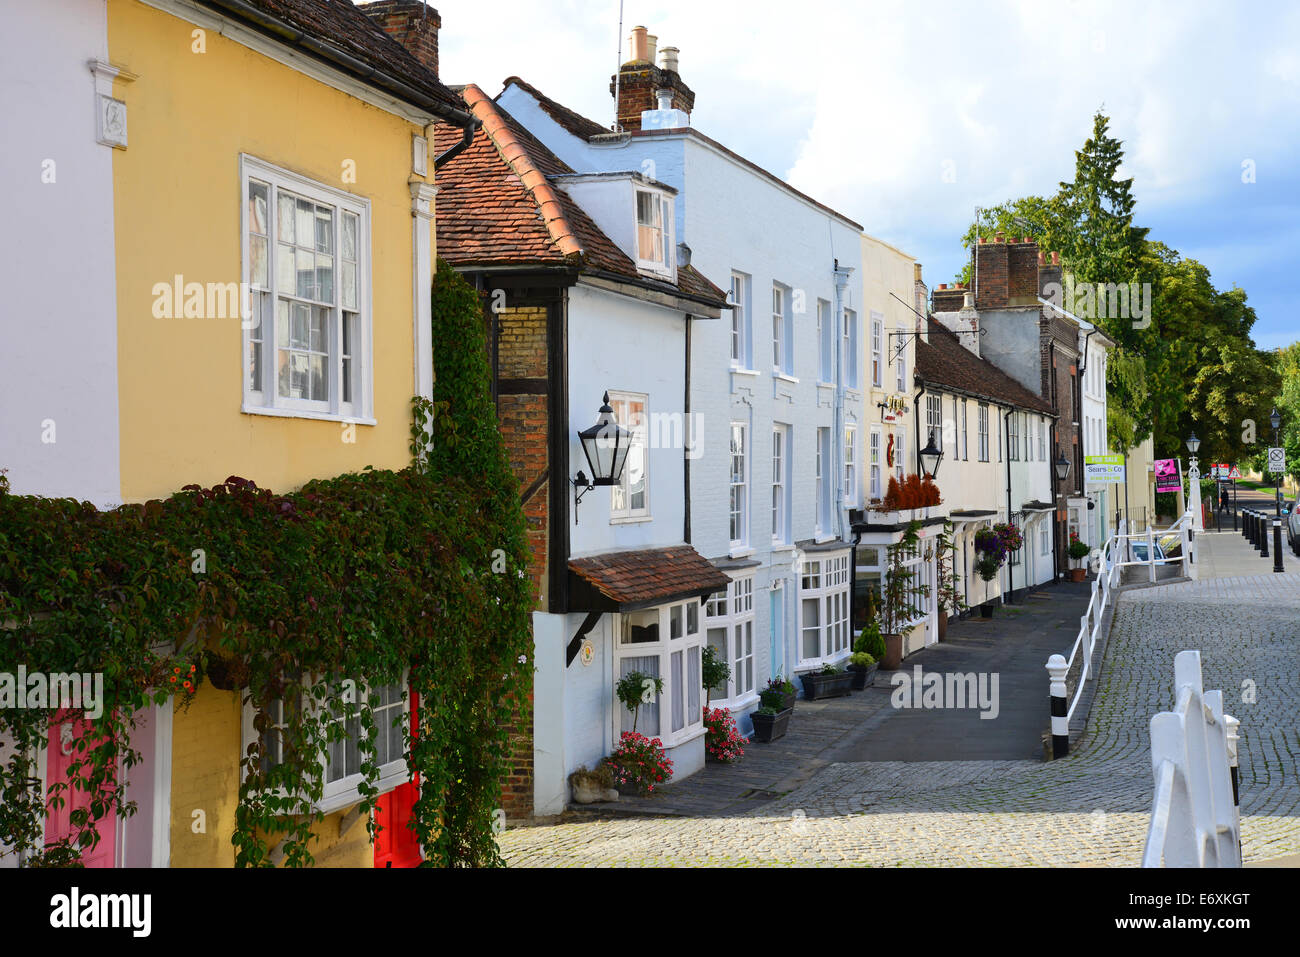 Period houses, High Street, Old Town, Hemel Hempstead, Hertfordshire, England, United Kingdom Stock Photo